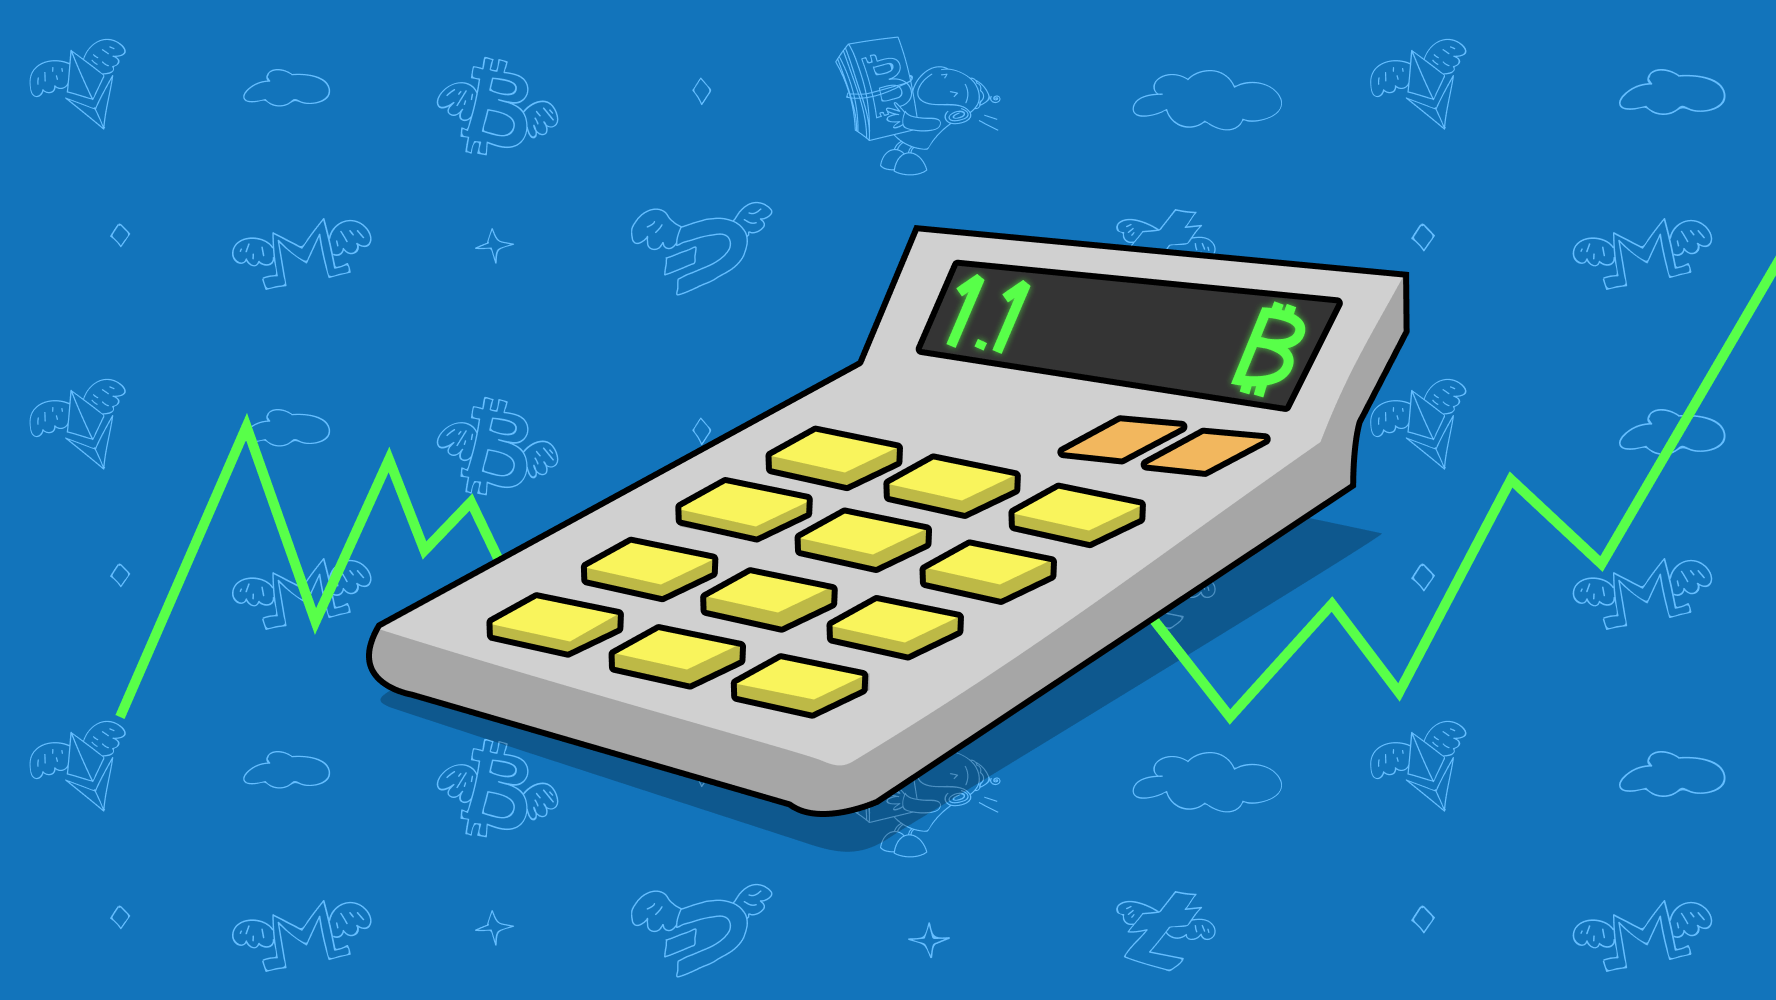 MarketCapOf | Crypto & Stocks Market Cap Calculator